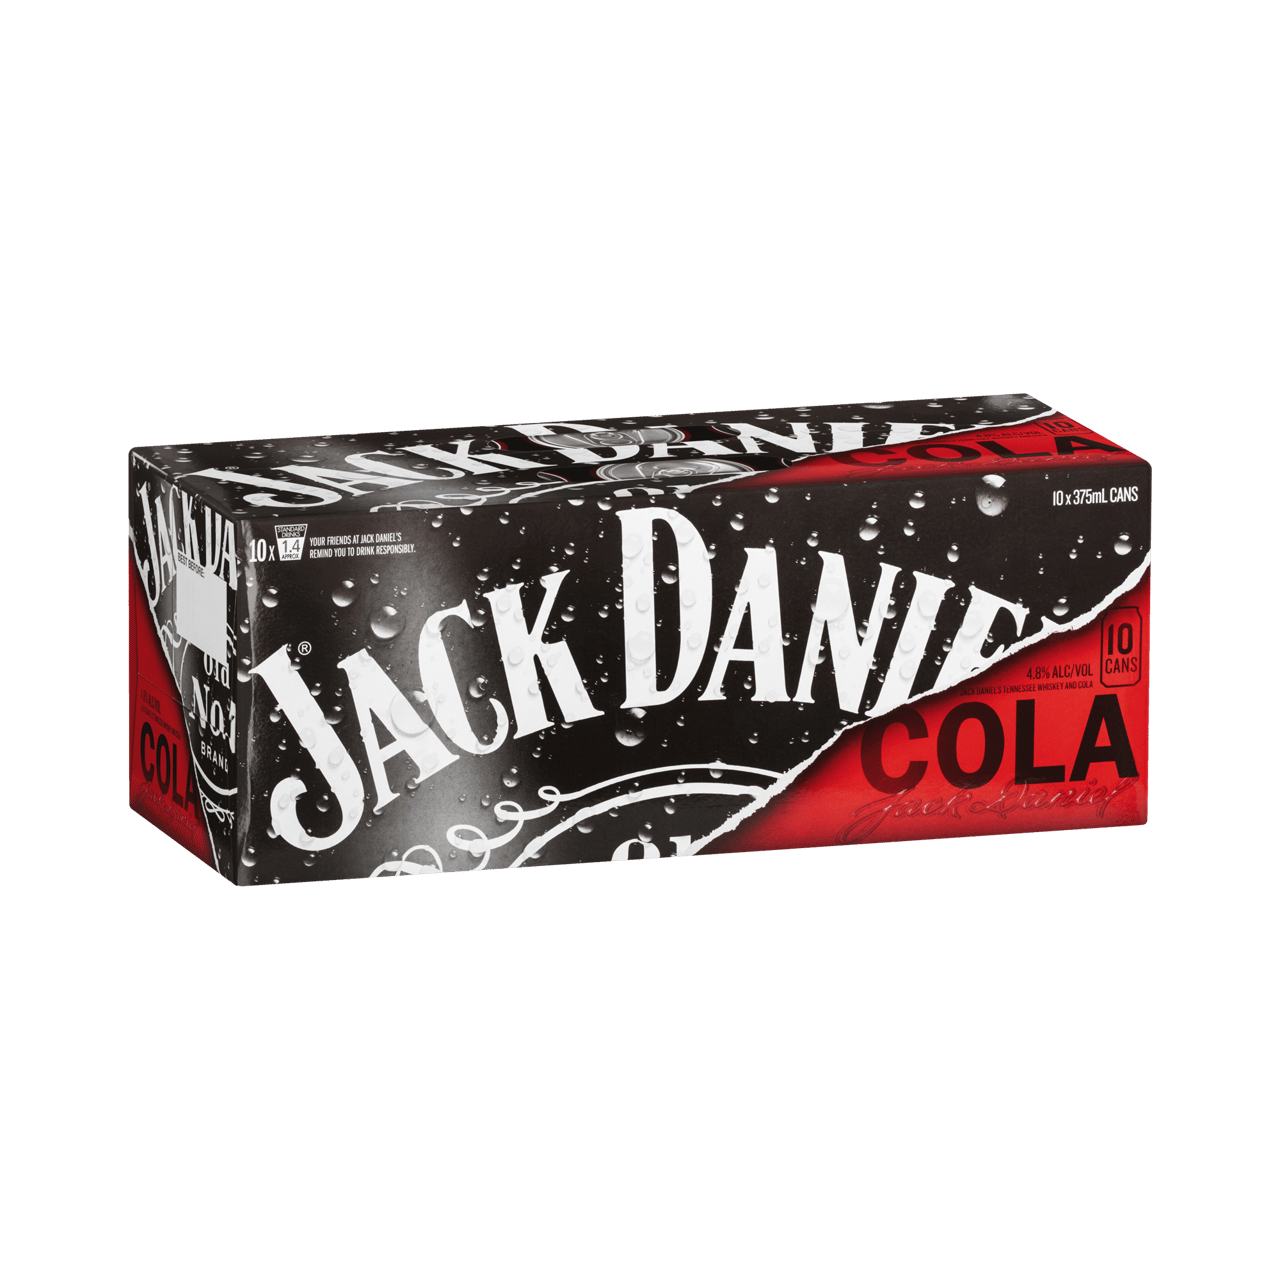 Jack Daniel's Tennessee Whiskey 375ml